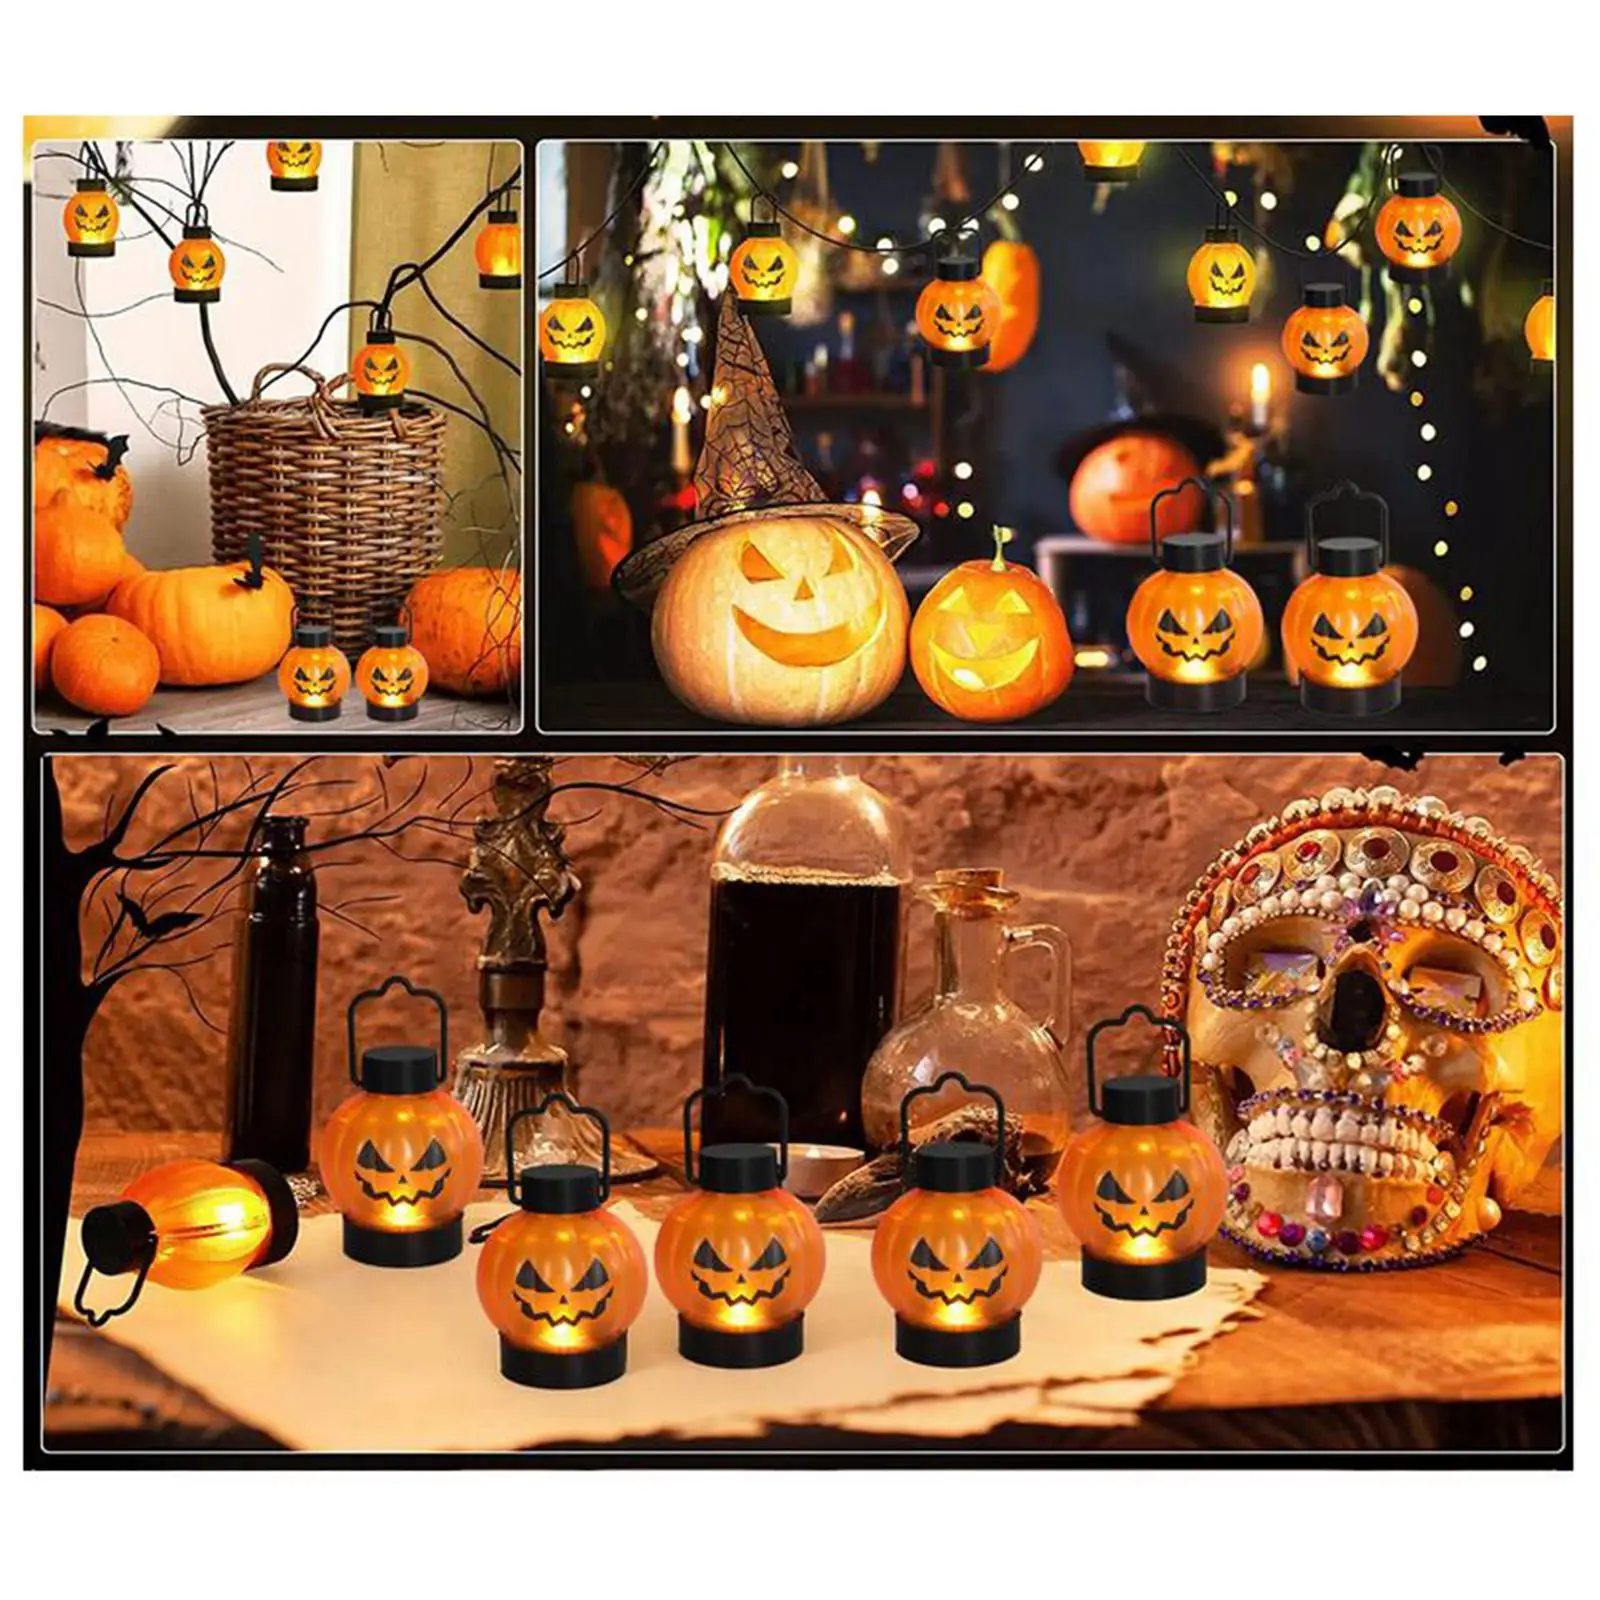 6x Halloween Pumpkin Lights Lamp Candle Lanterns for Party Harvest Halloween No Pattern